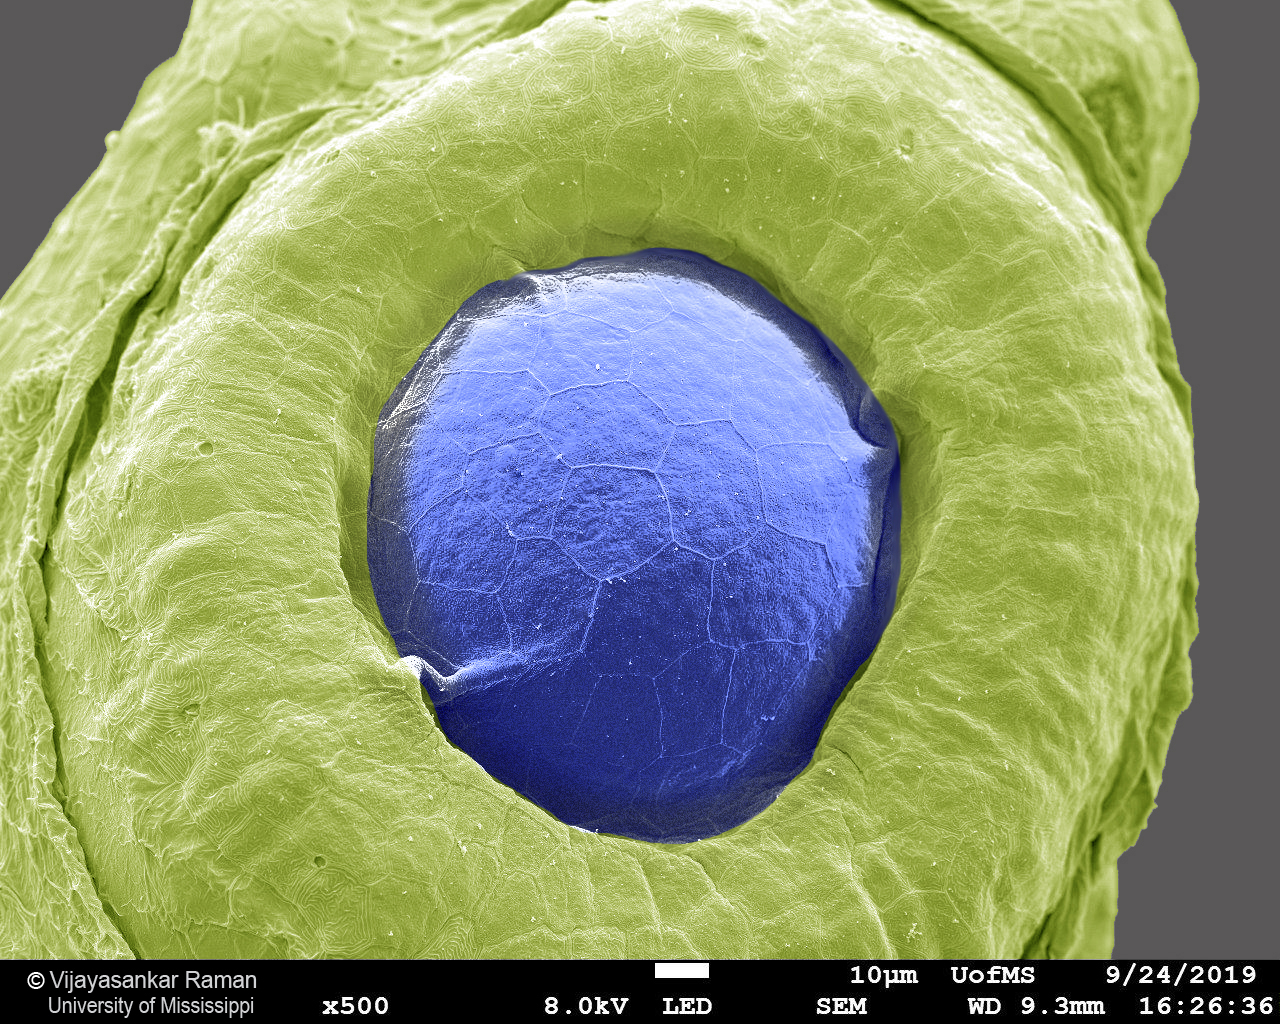 Colorized SEM image of a developing eye of a zebrafish embryo